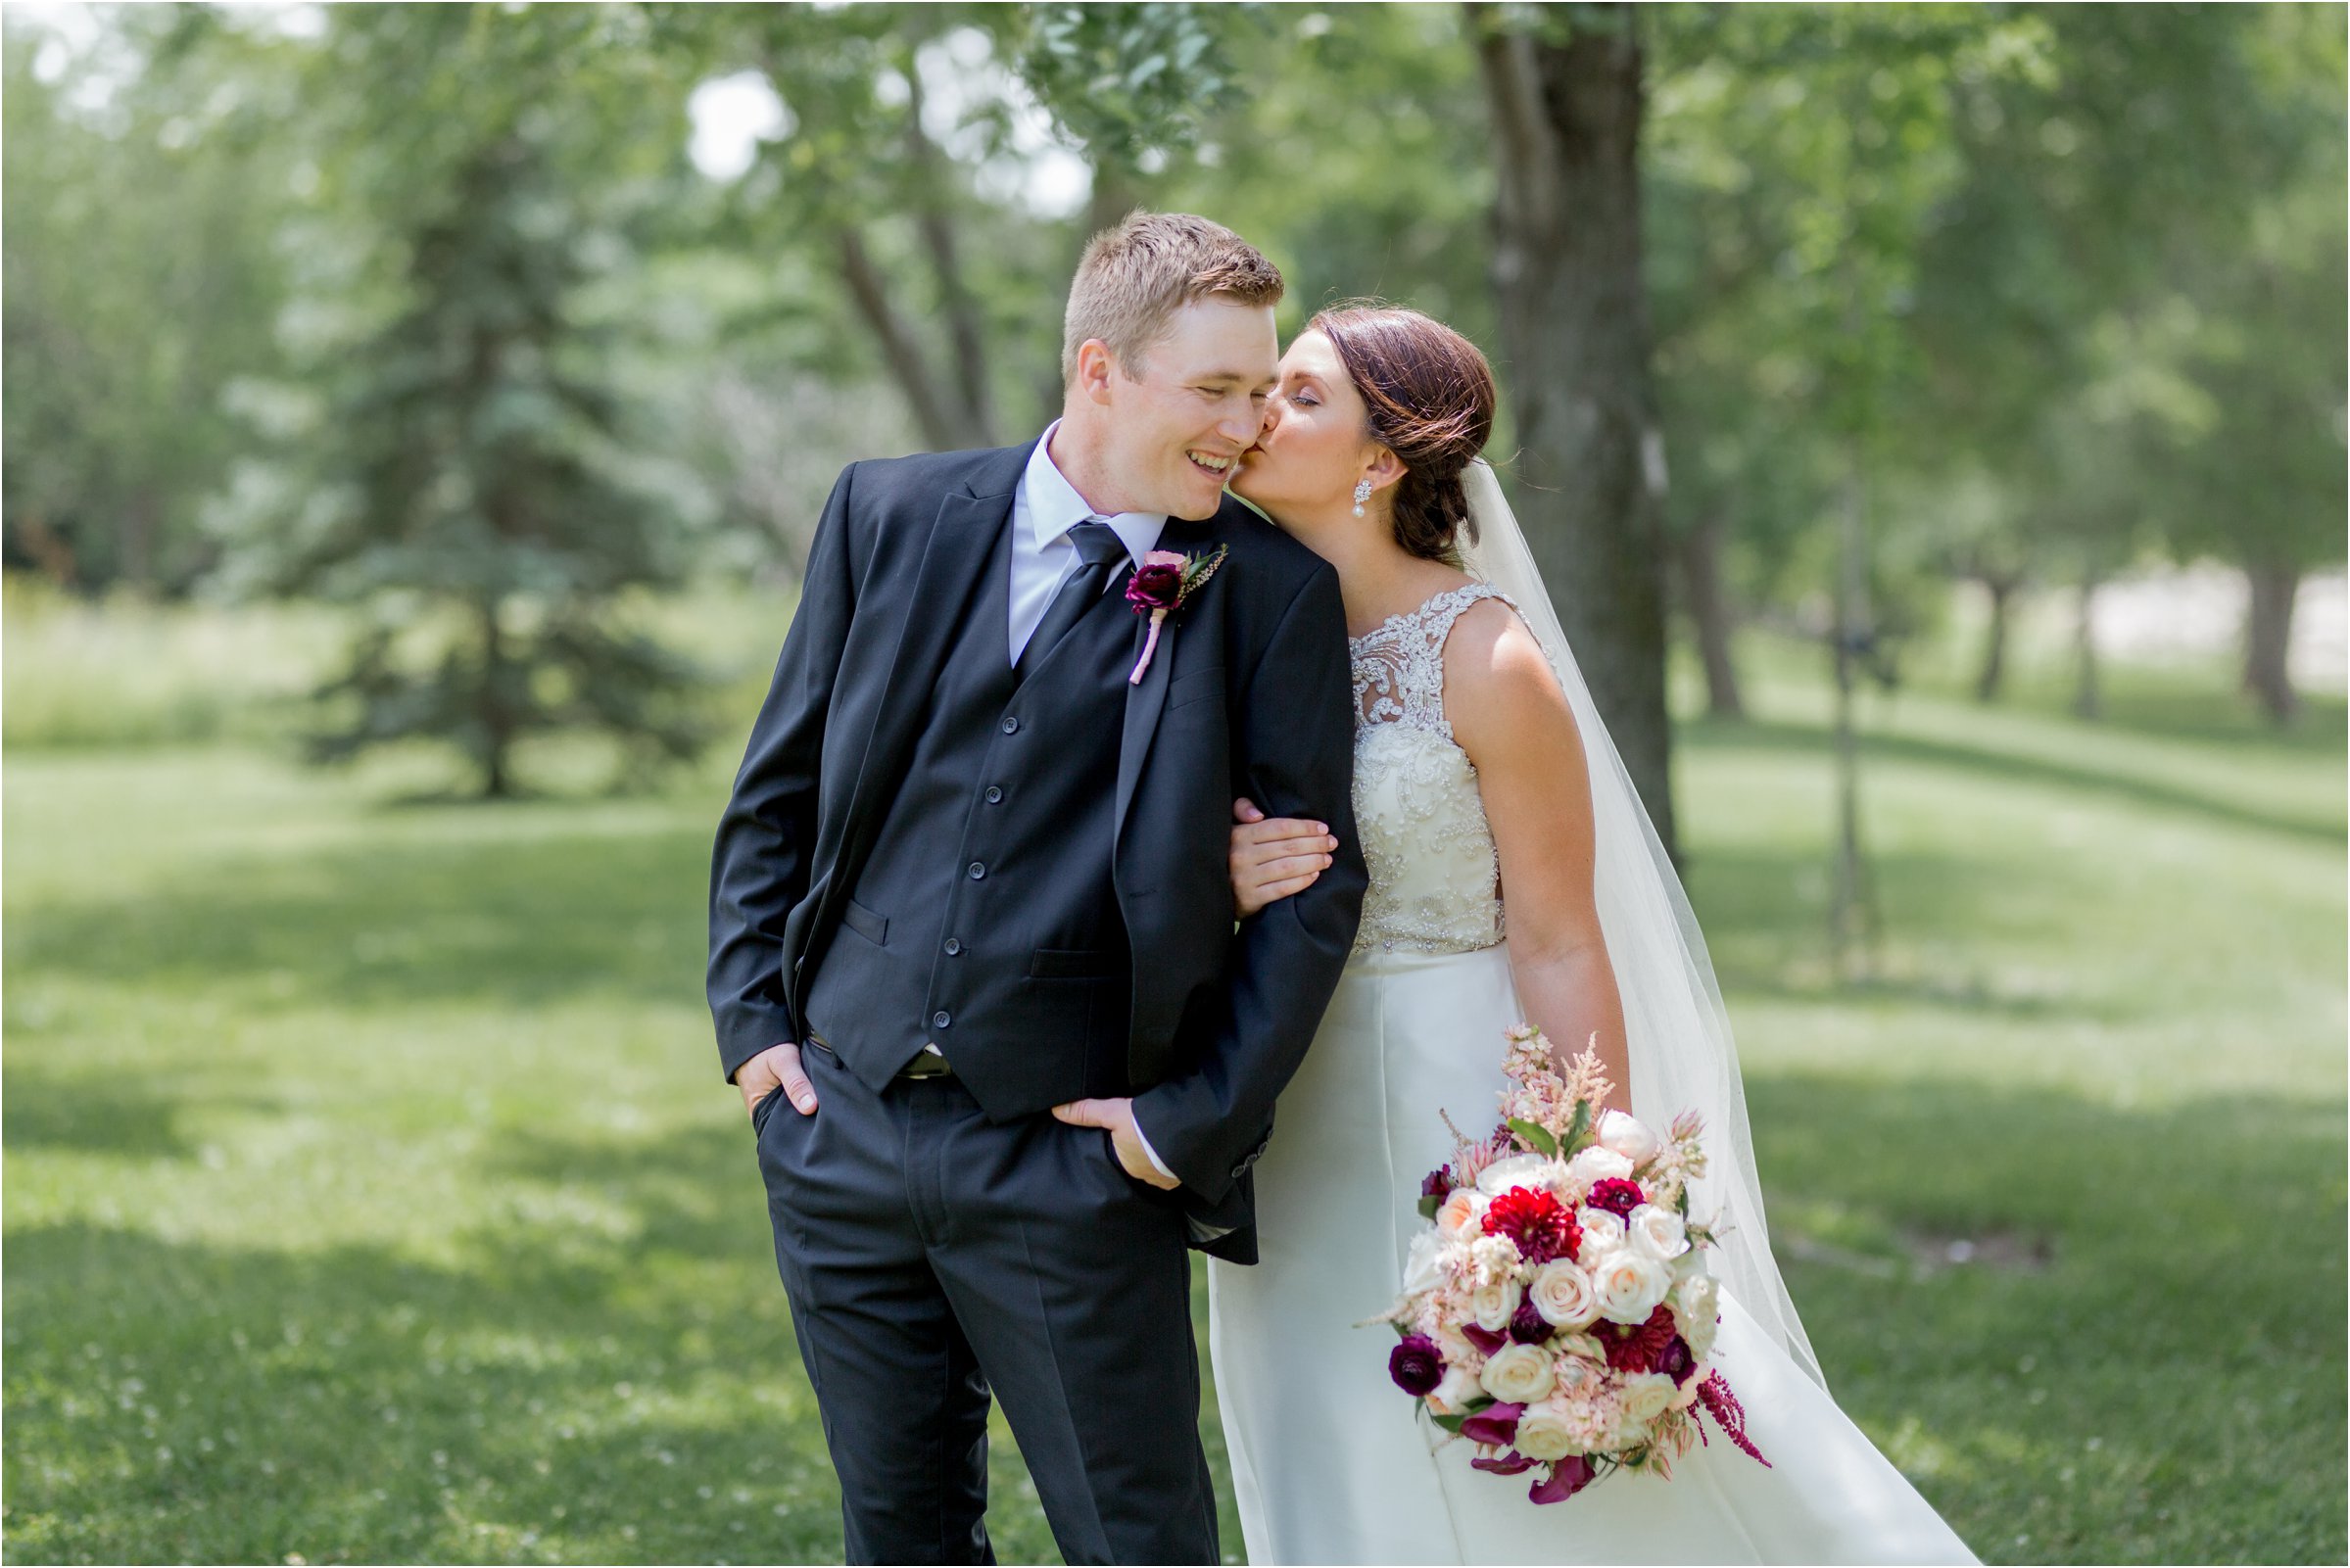 Holdrege, Nebraska Wedding by Northern Colorado Wedding Photographer